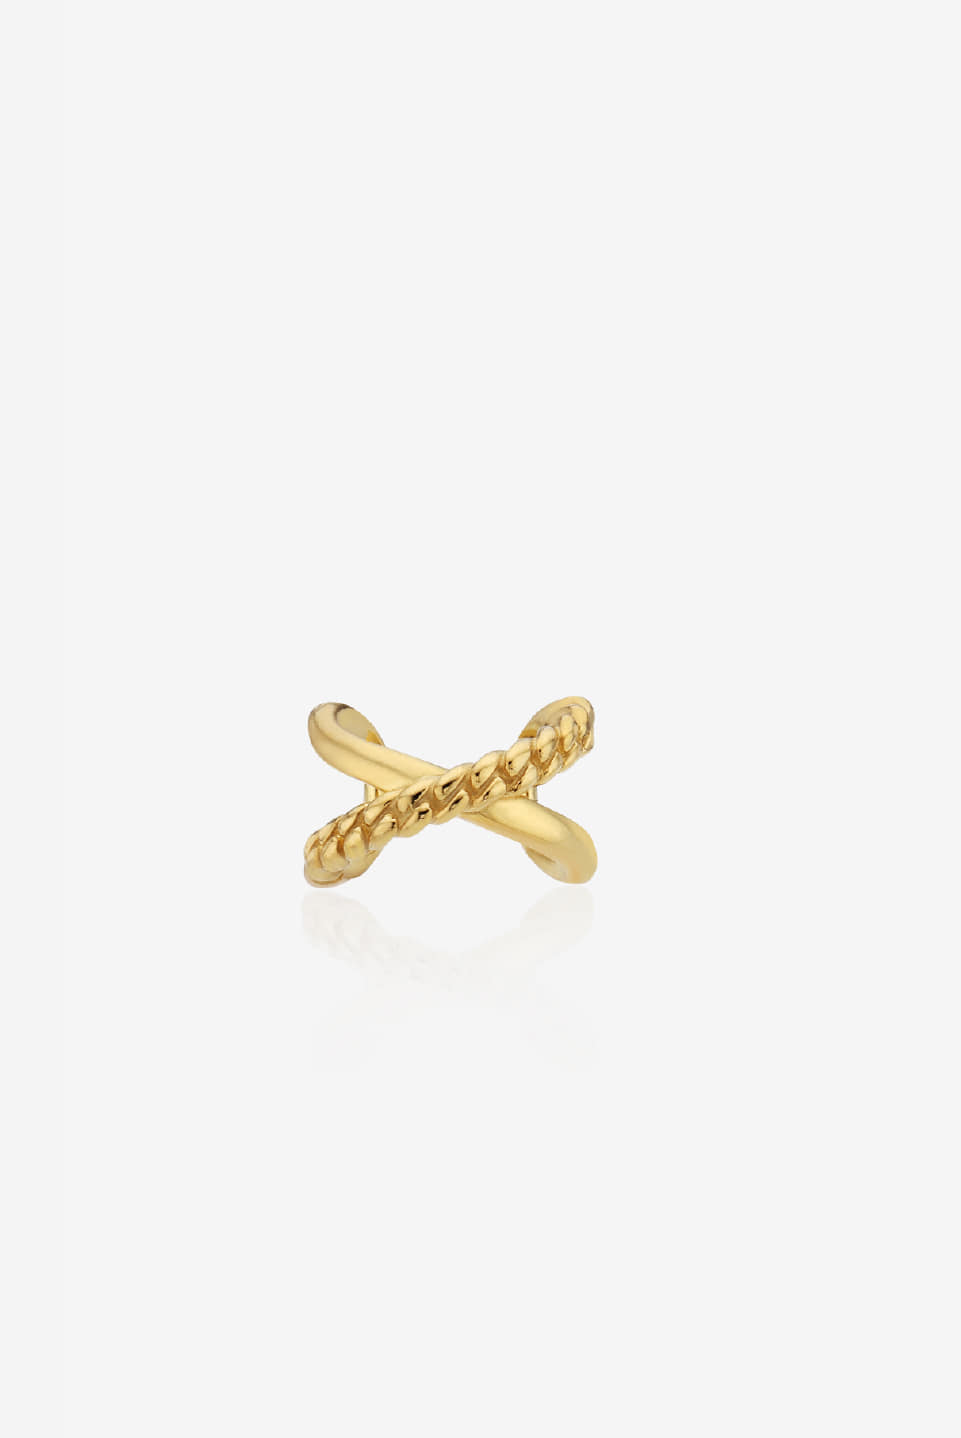 X Knot Chain Ear cuff in Gold